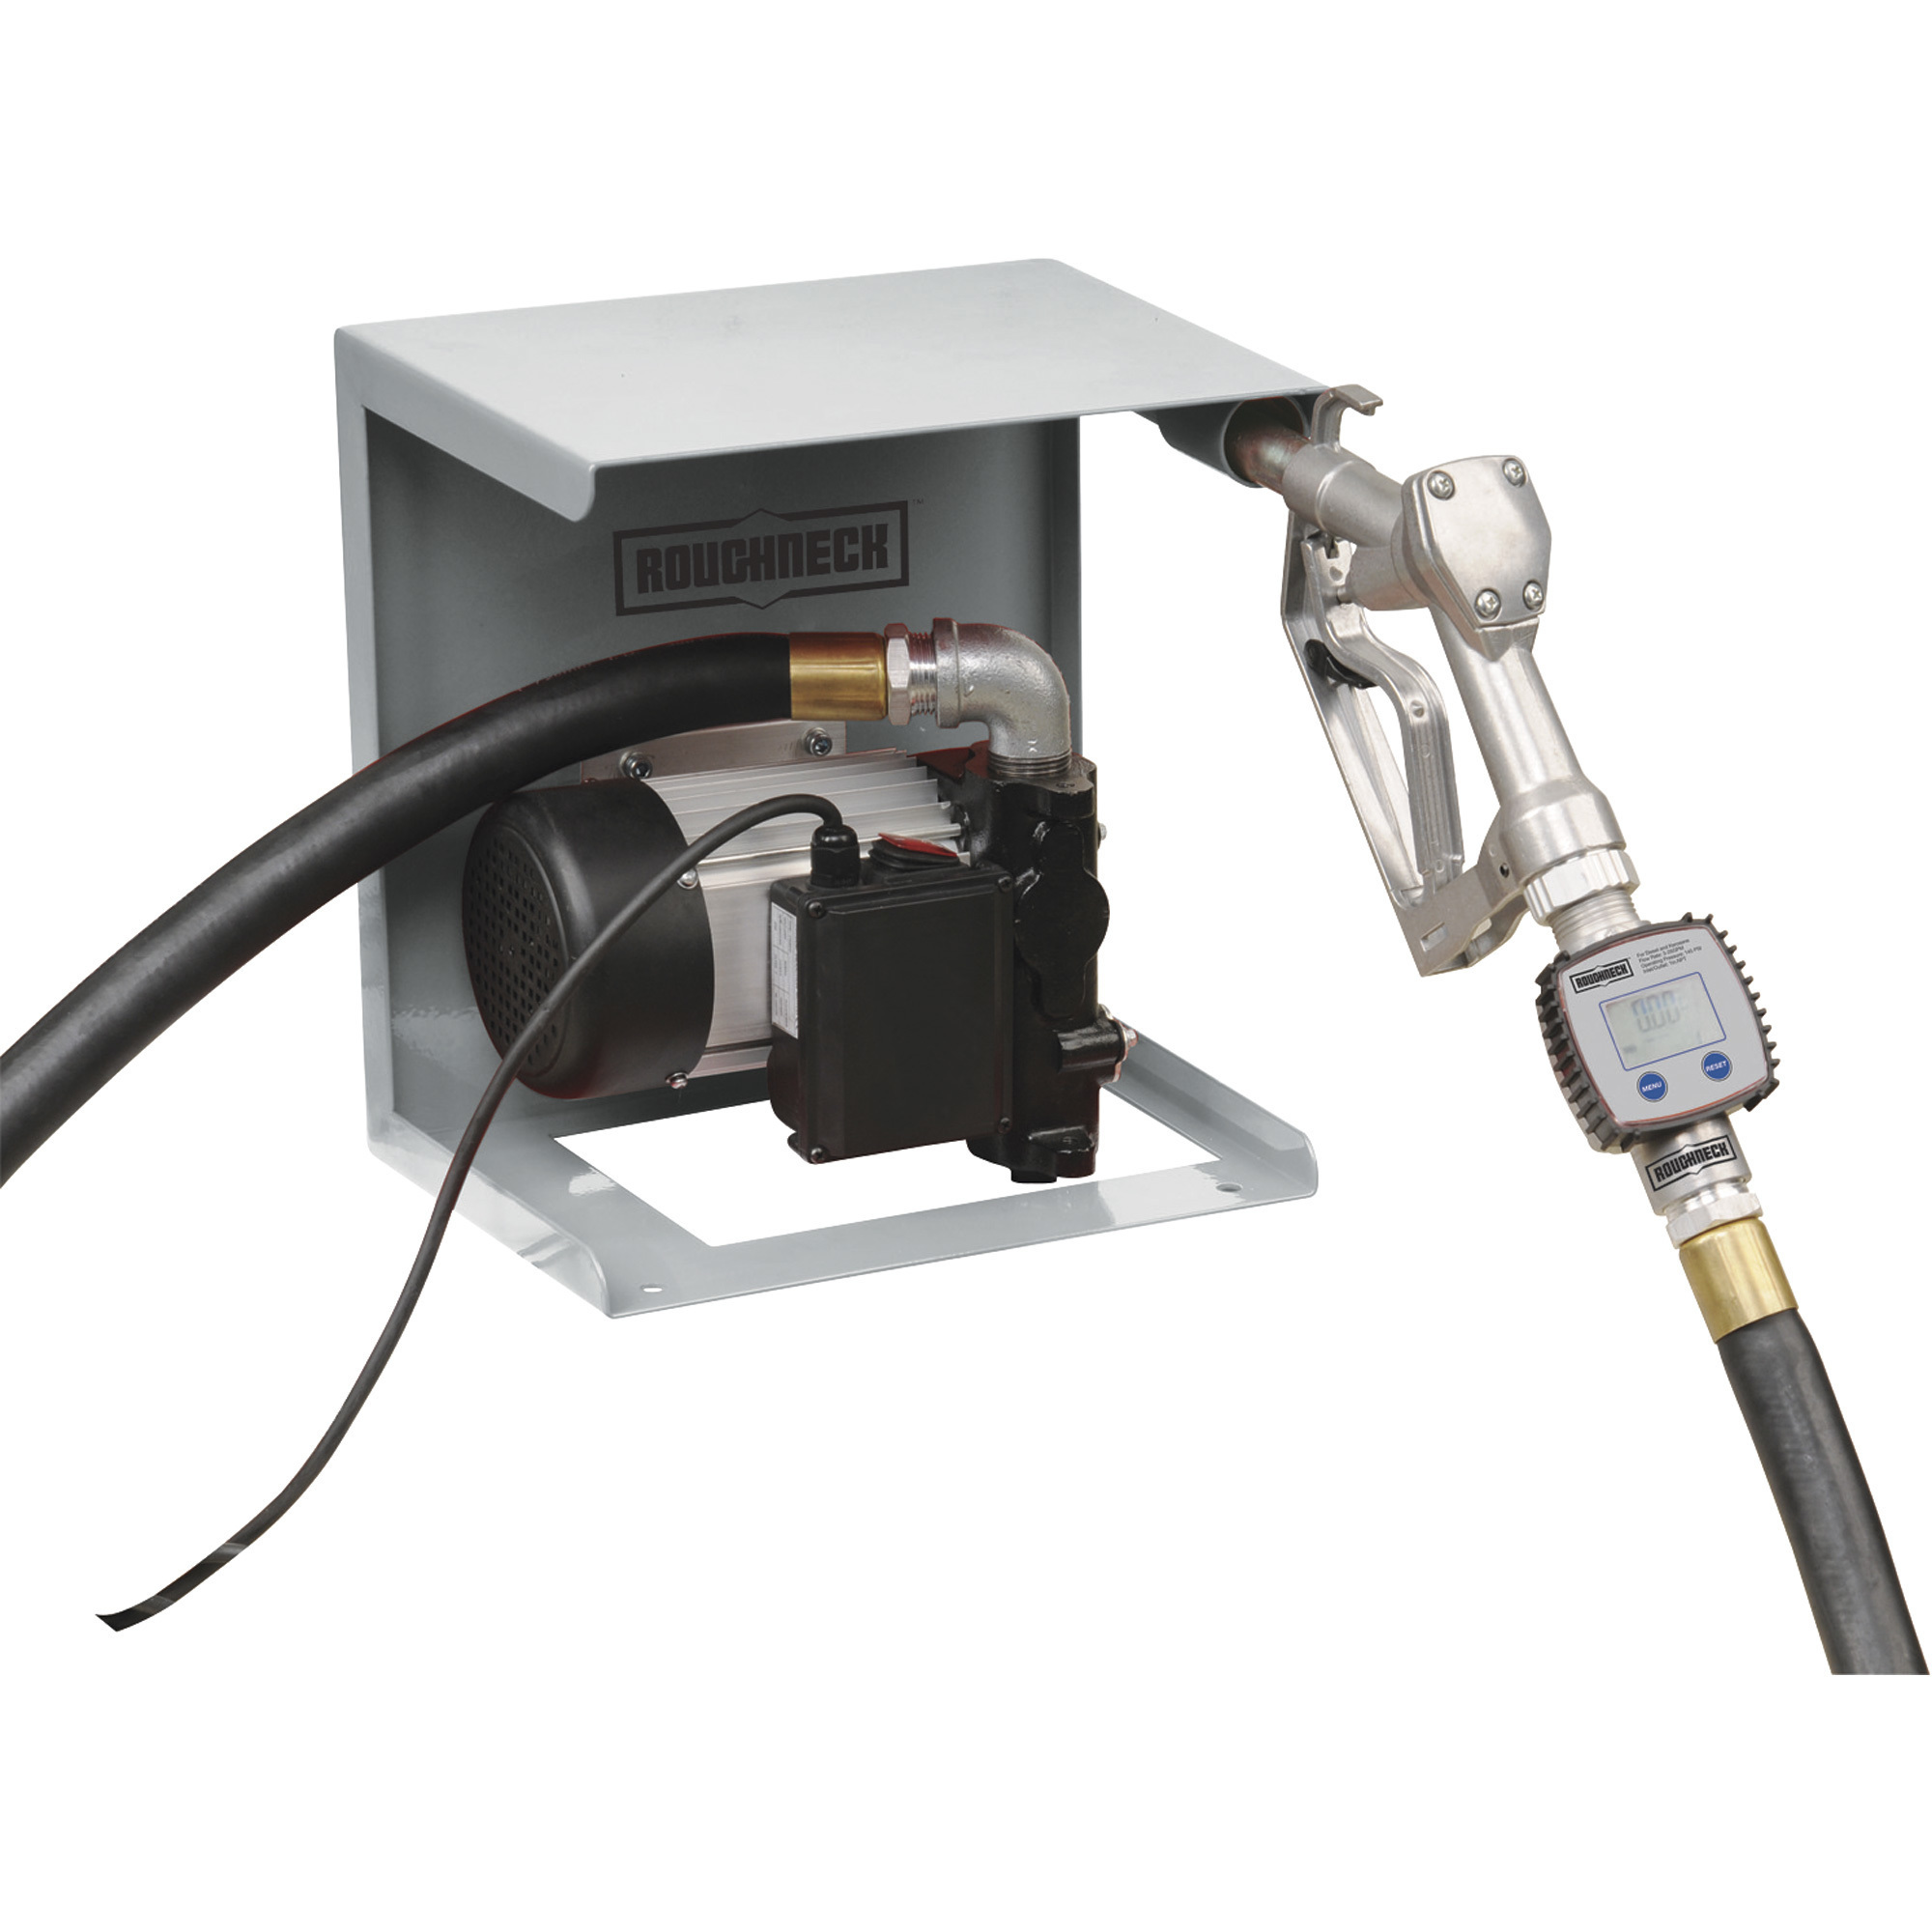 Roughneck 120V Fuel Transfer Pump, 22 GPM, Meter, Manual Nozzle, Hose